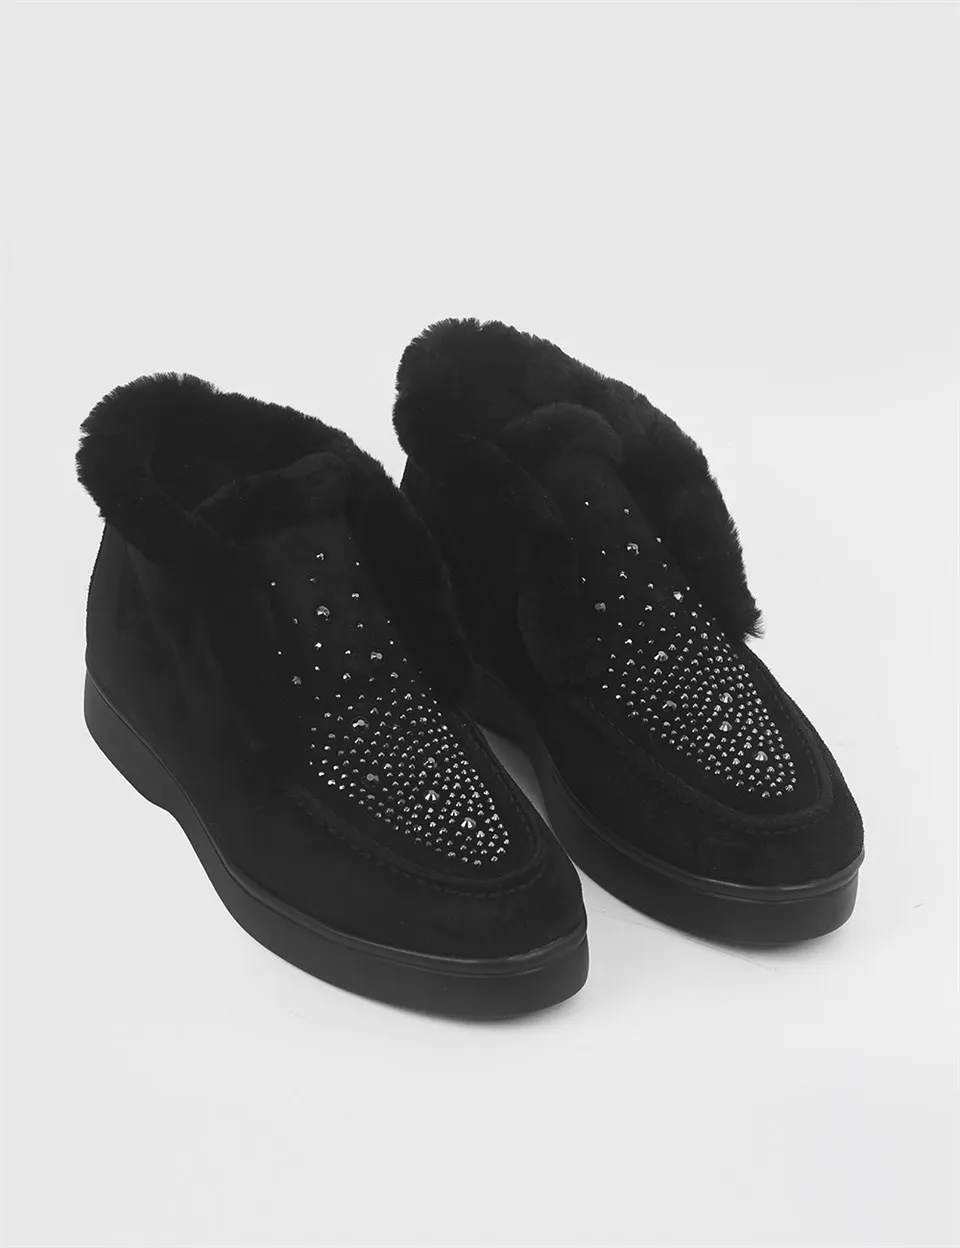 

ILVi-Genuine Leather Handmade Morda Black Suede Women's Boot Women Shoes 2021 Fall/Winter